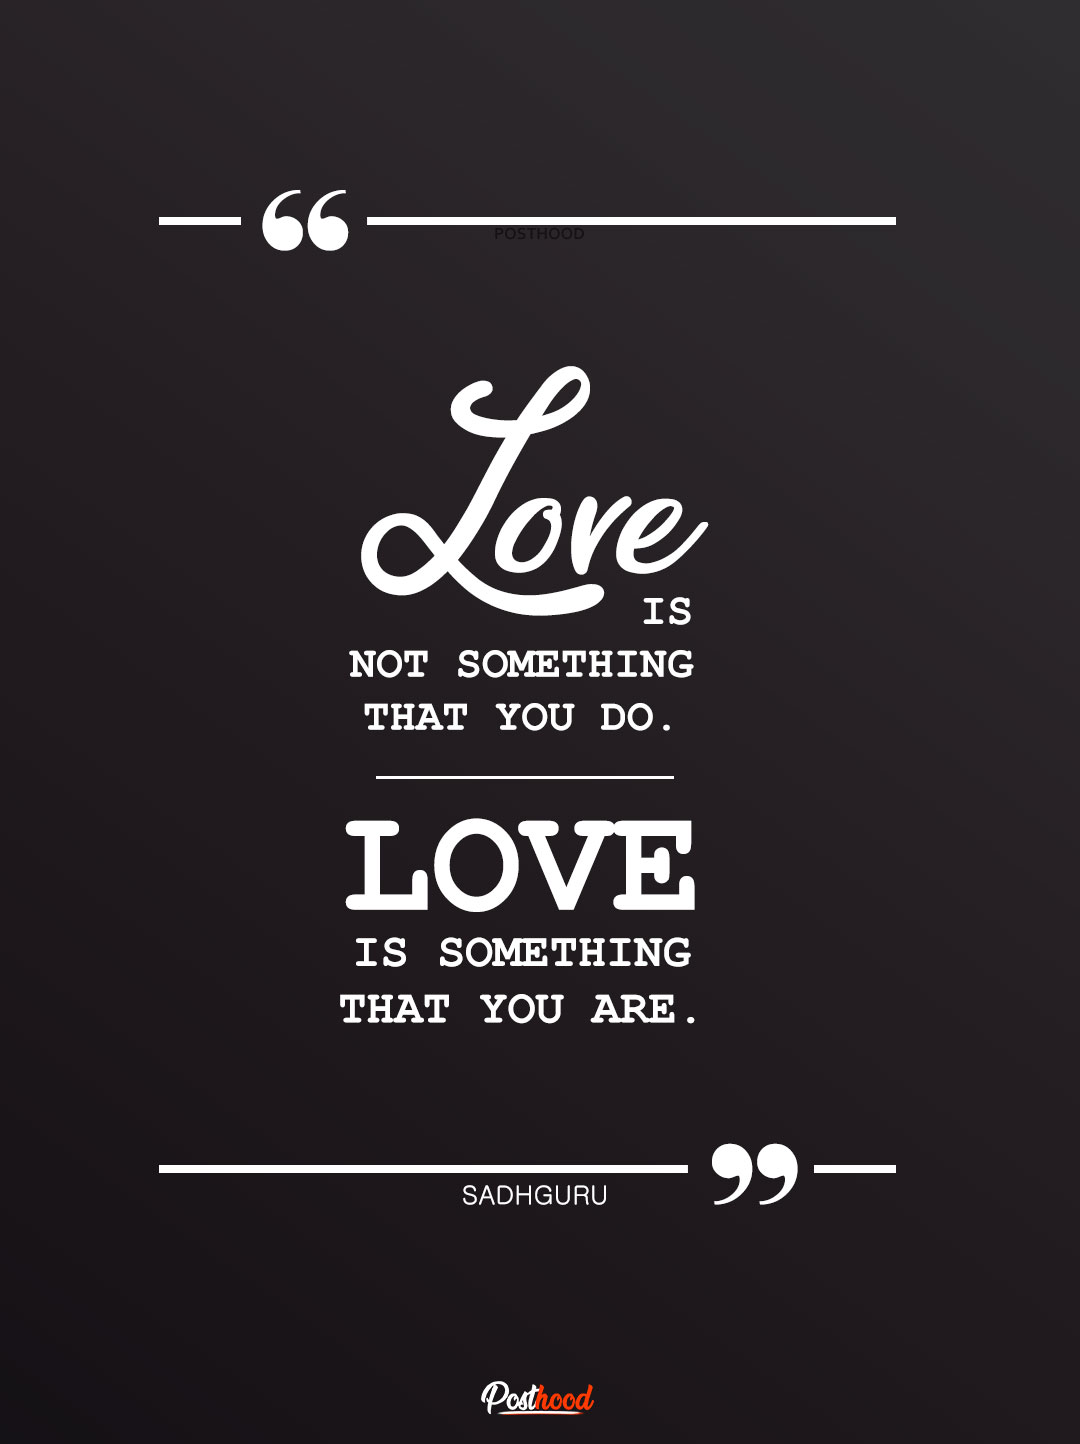 Sadhguru quotes on love, Quotes on relationship and marriage, Inspiring Sadhguru quotes on life. 